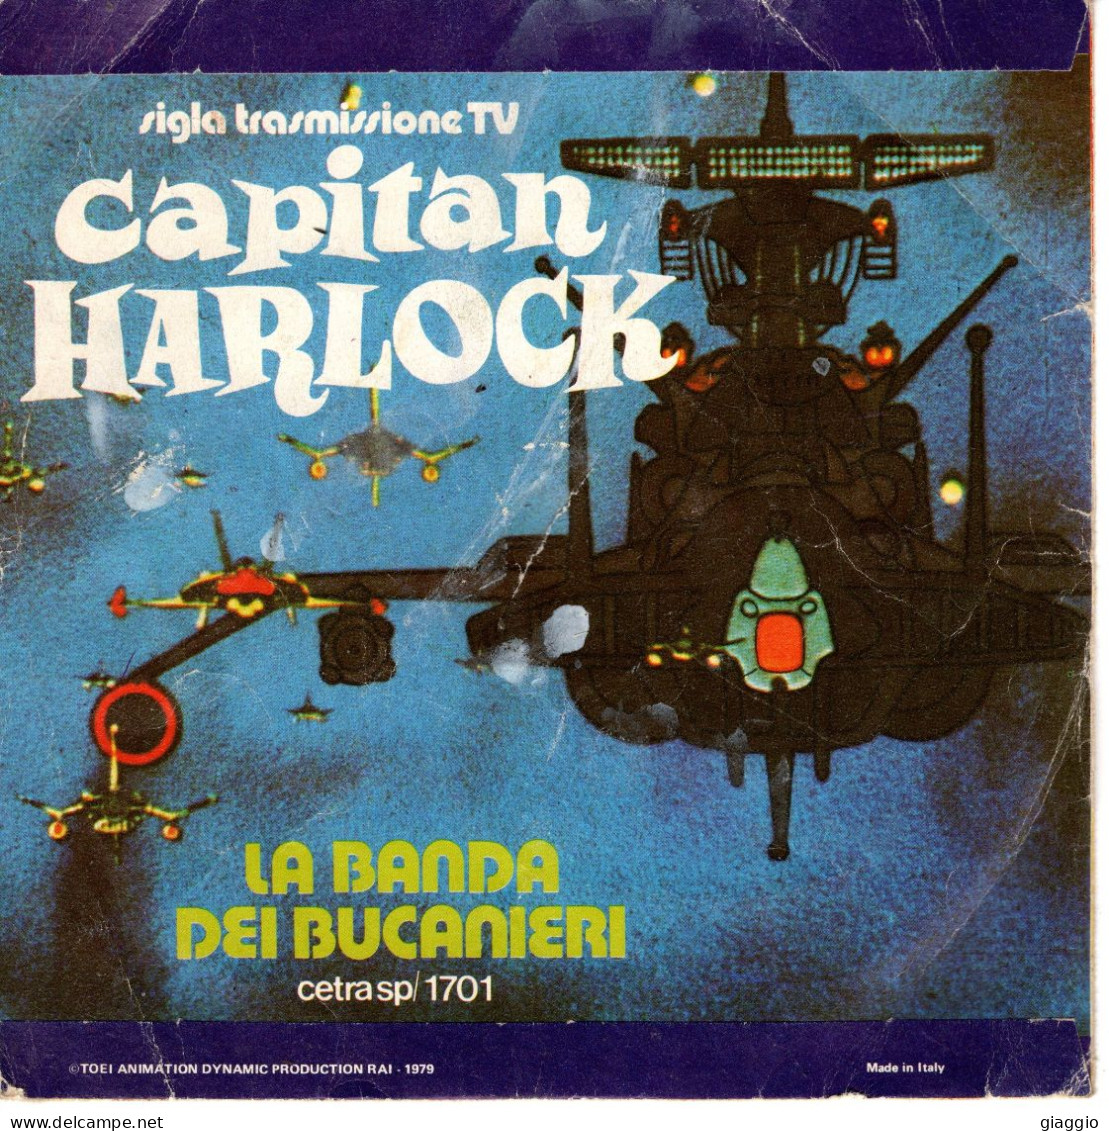 °°° 571) 45 GIRI - CAPITAN HARLOCK / LA BANDA DEI BUCANIERI °°° - Other - Italian Music